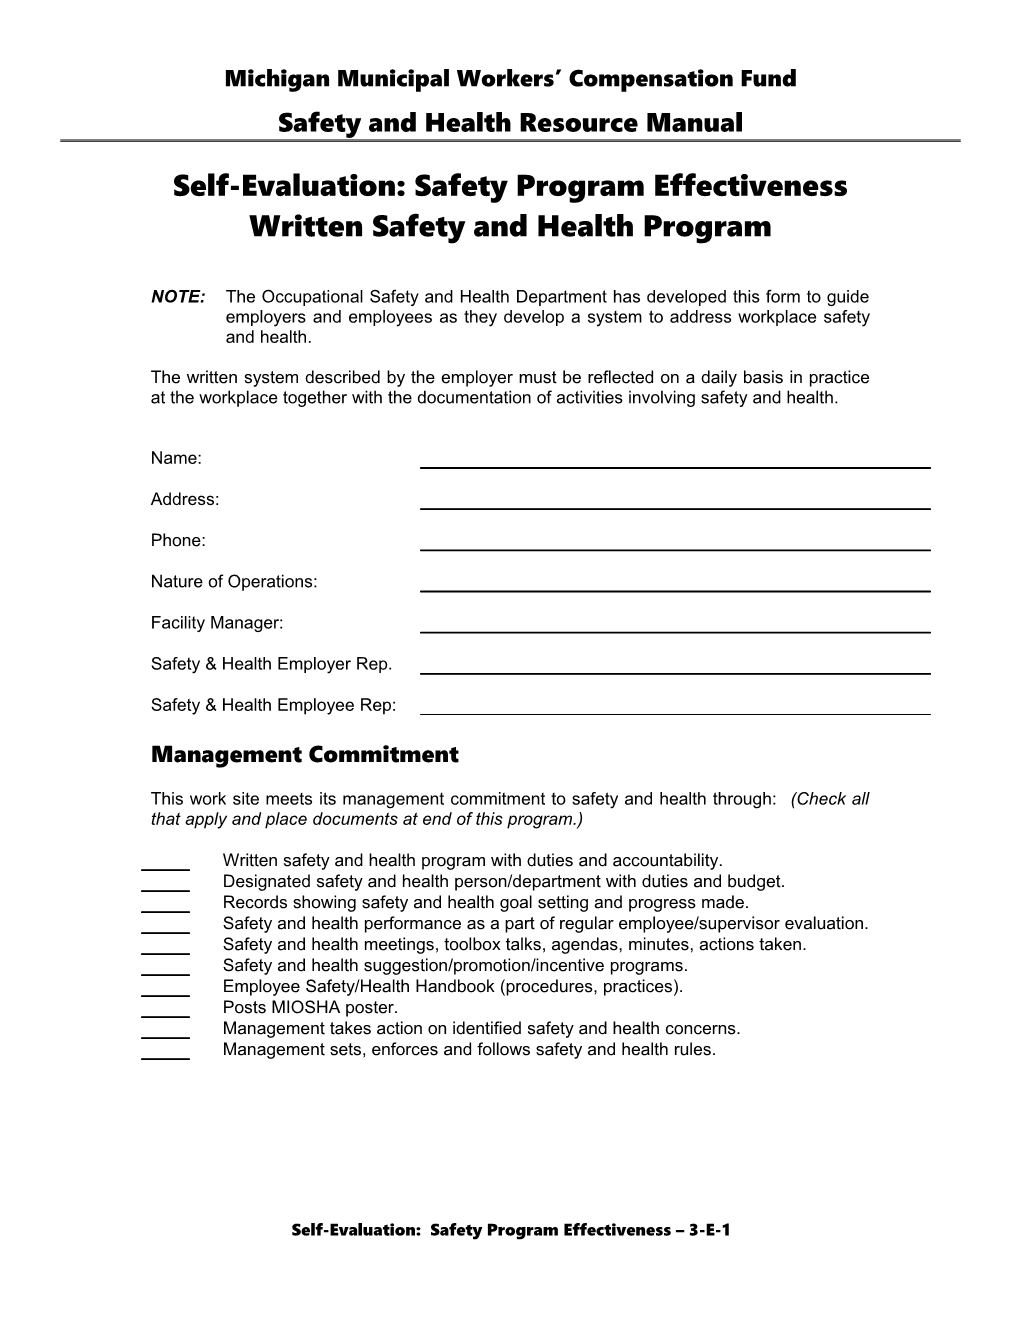 Self-Evaluation: Safety Program Effectiveness